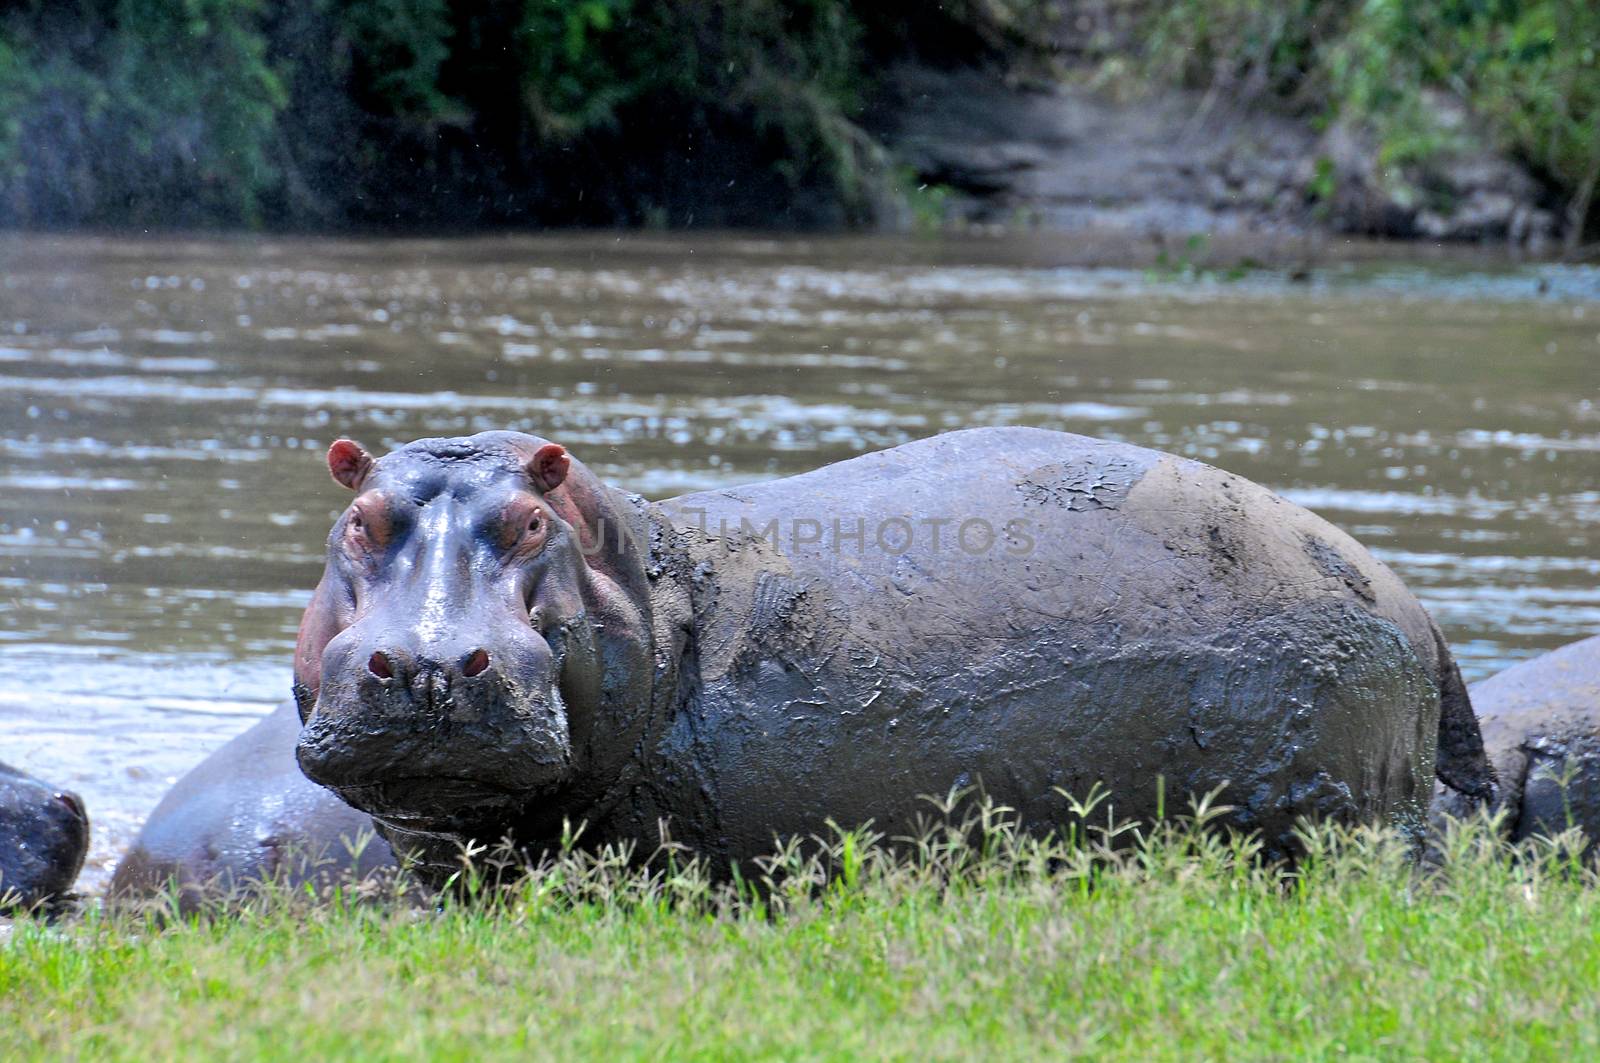 Hippo in national park Tanzania by moizhusein